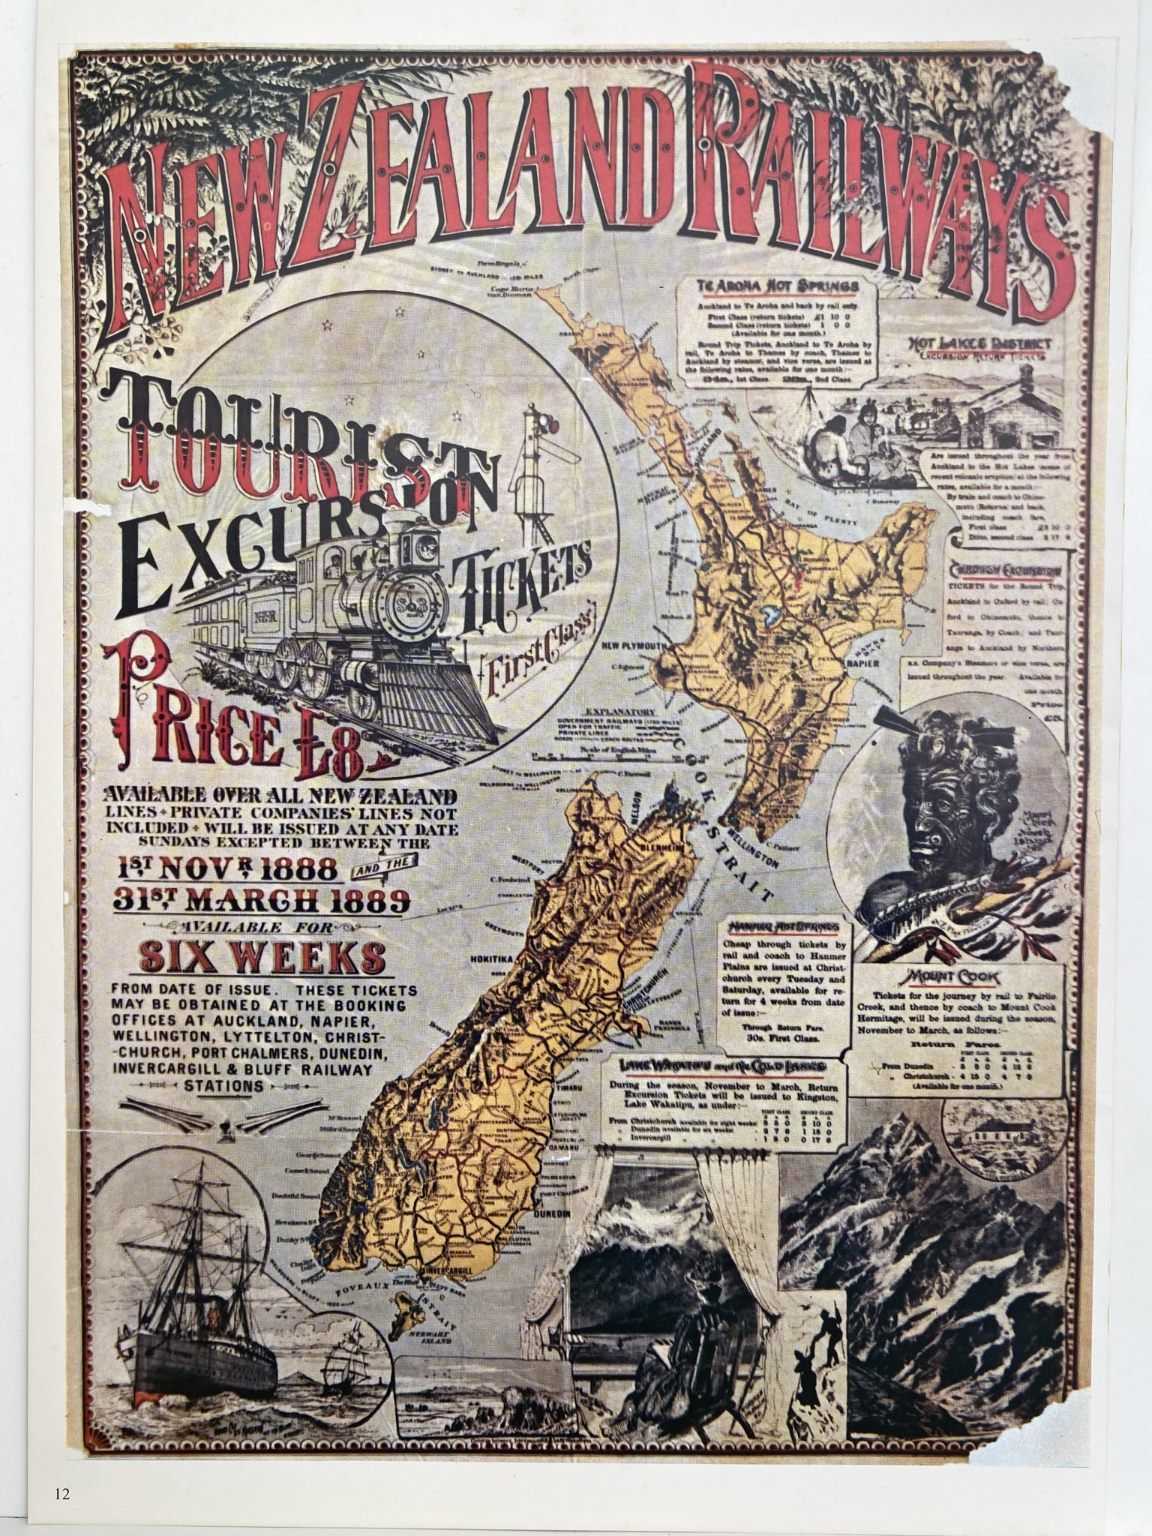 VINTAGE POSTER: New Zealand Railways 1888